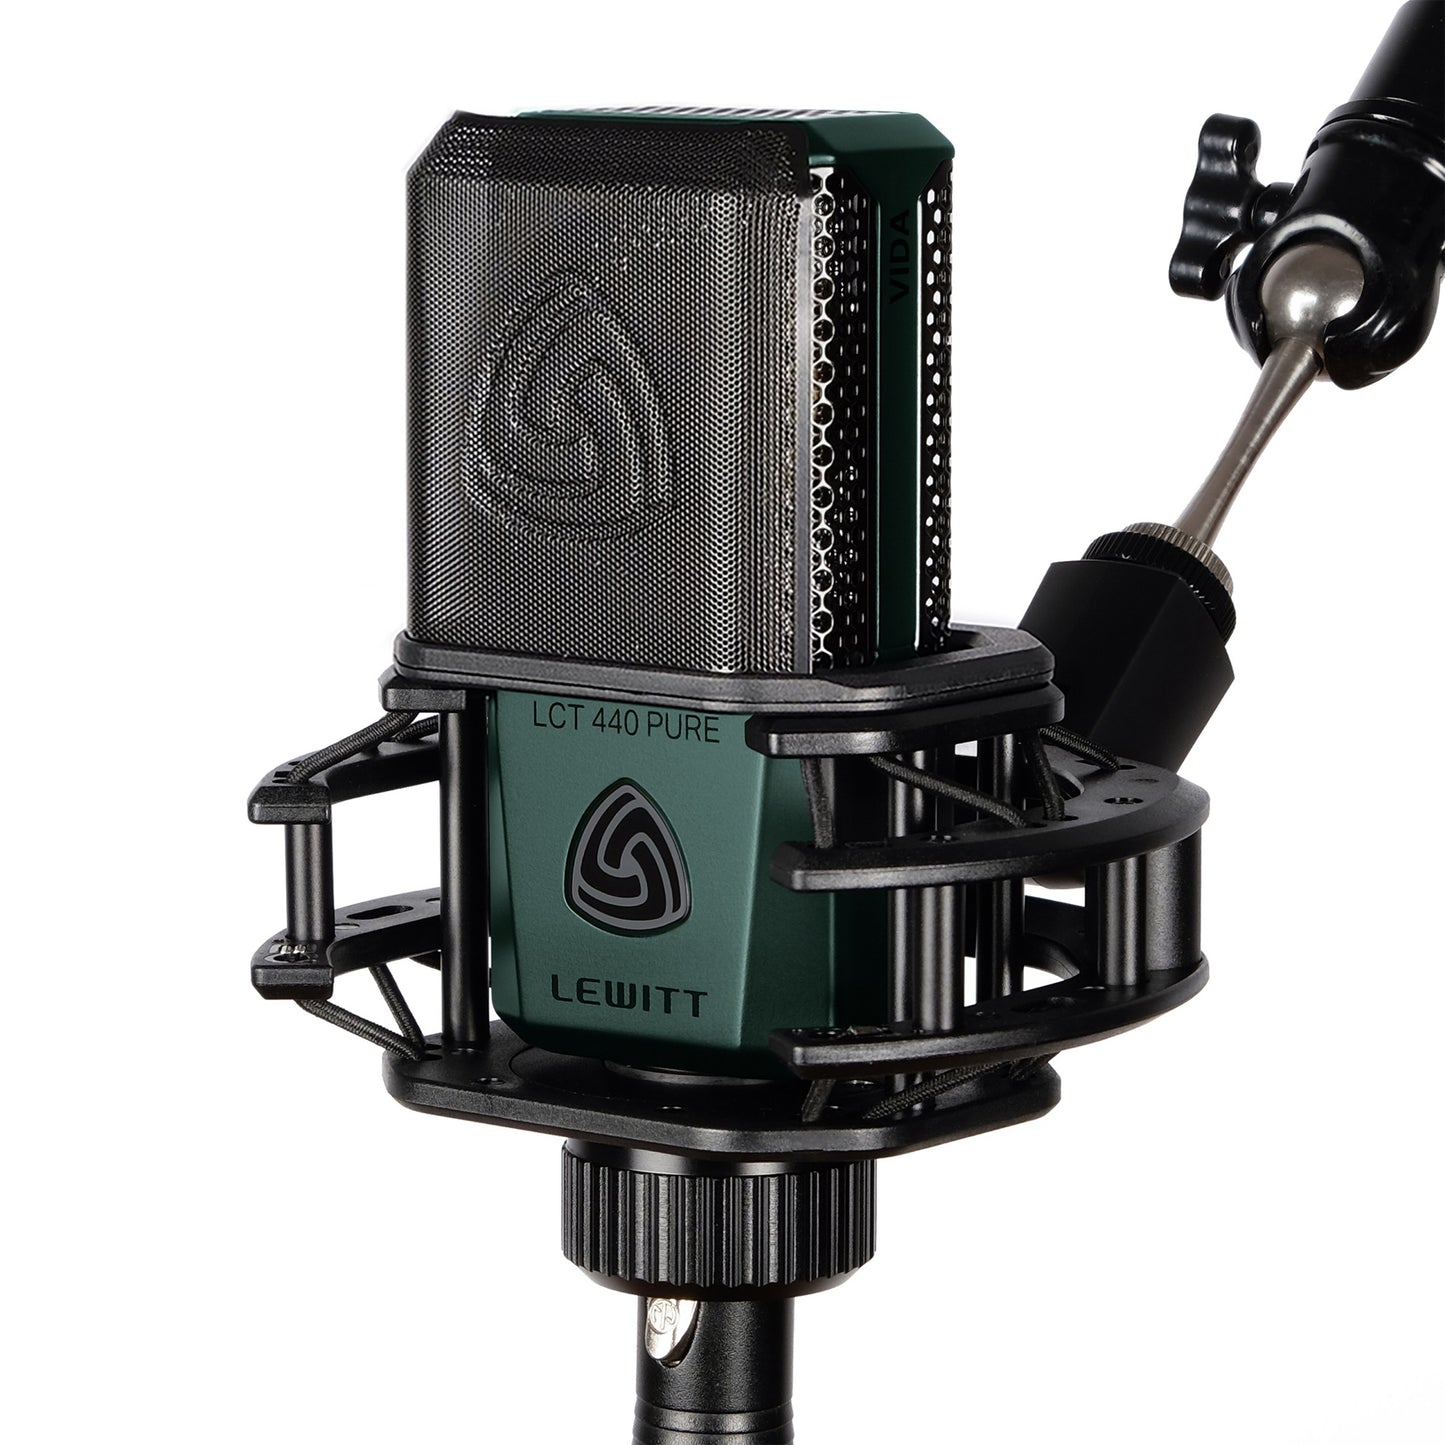 Lewitt LCT 440 PURE VIDA Edition Large Diaphragm Condenser Microphone Rainforest Green